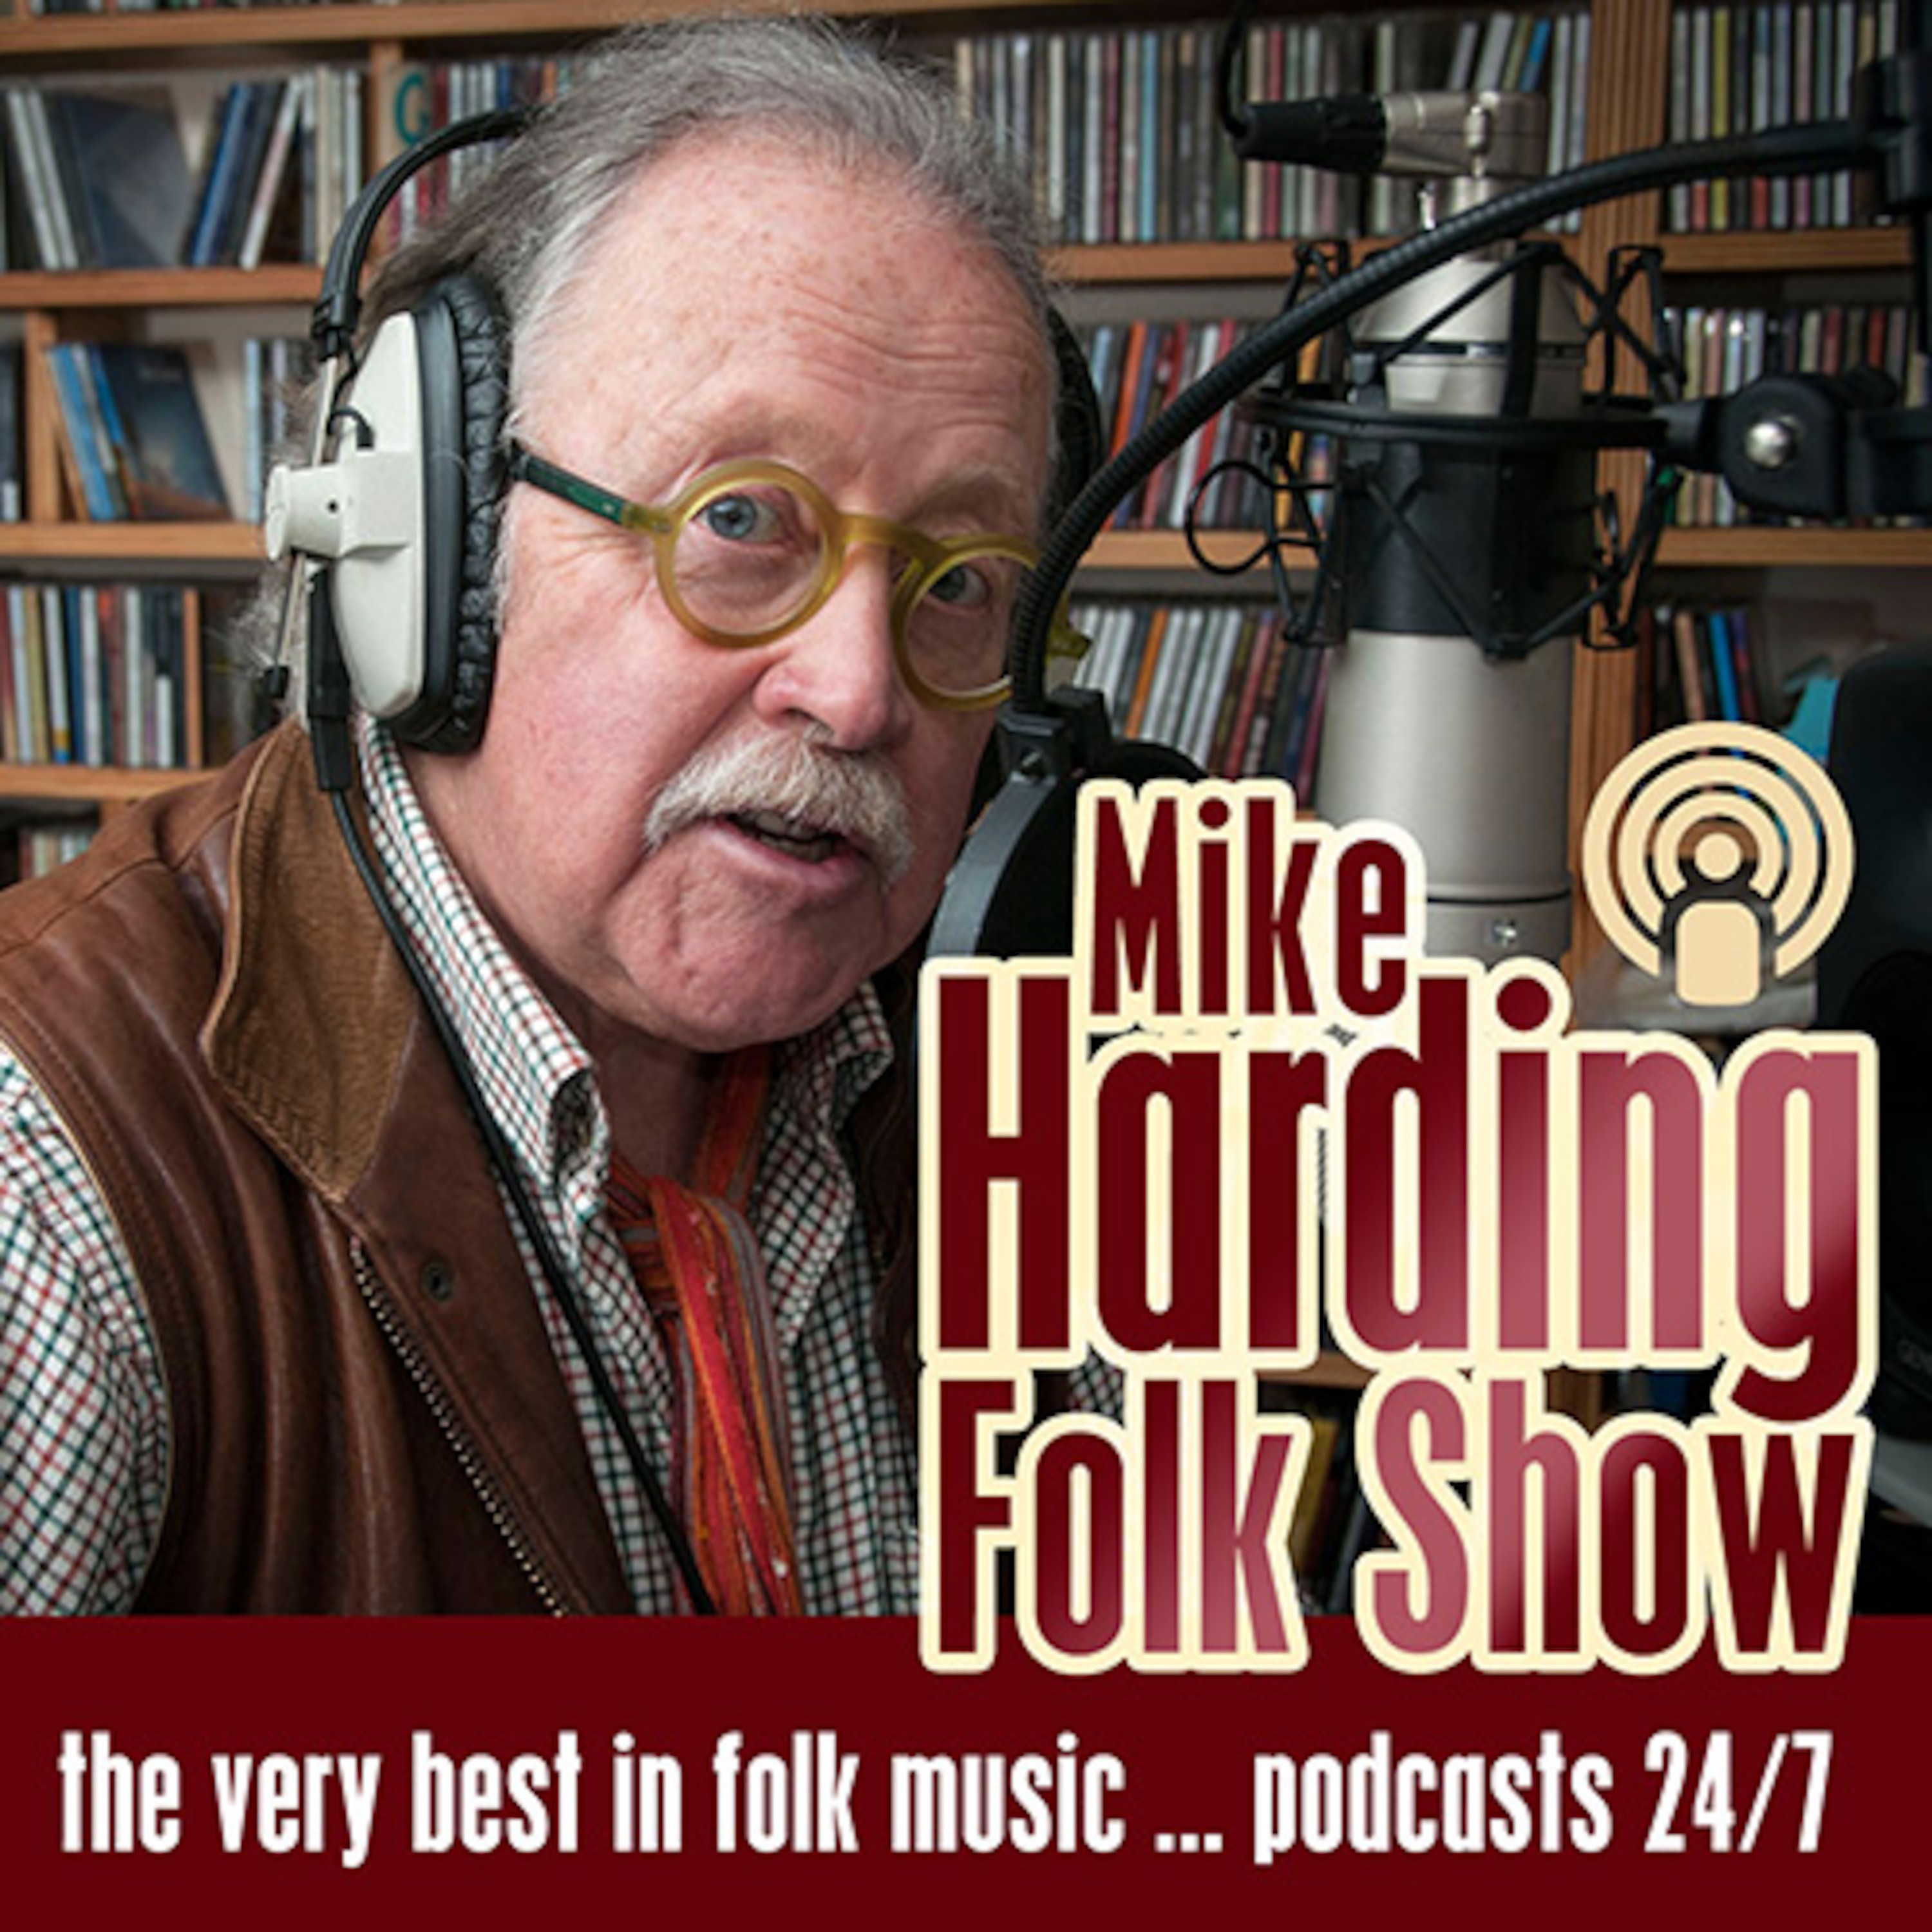 Mike Harding Folk Show 199